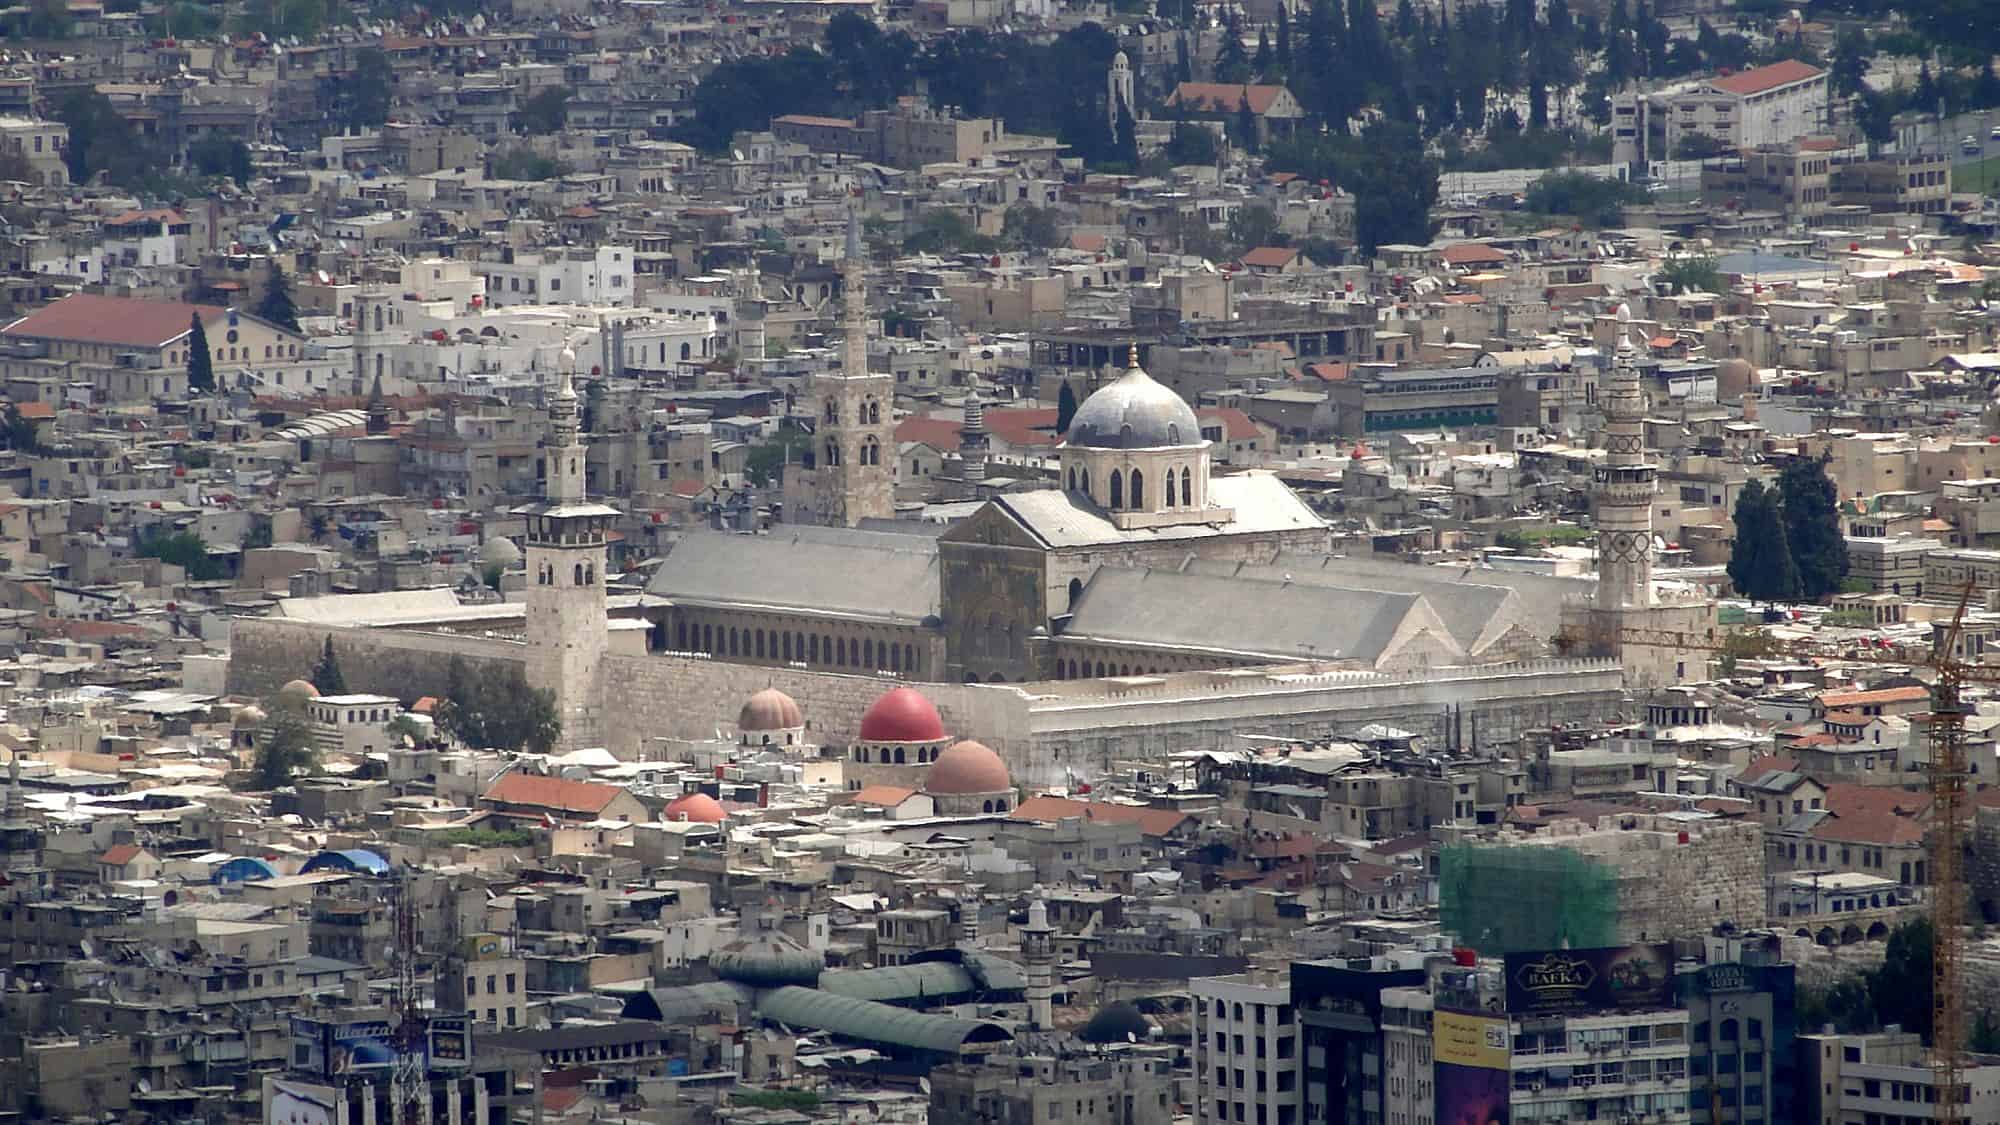 The Umayyad Mosque in Damascus. Photo by Bernard Gagnon via Wikimedia Commons.